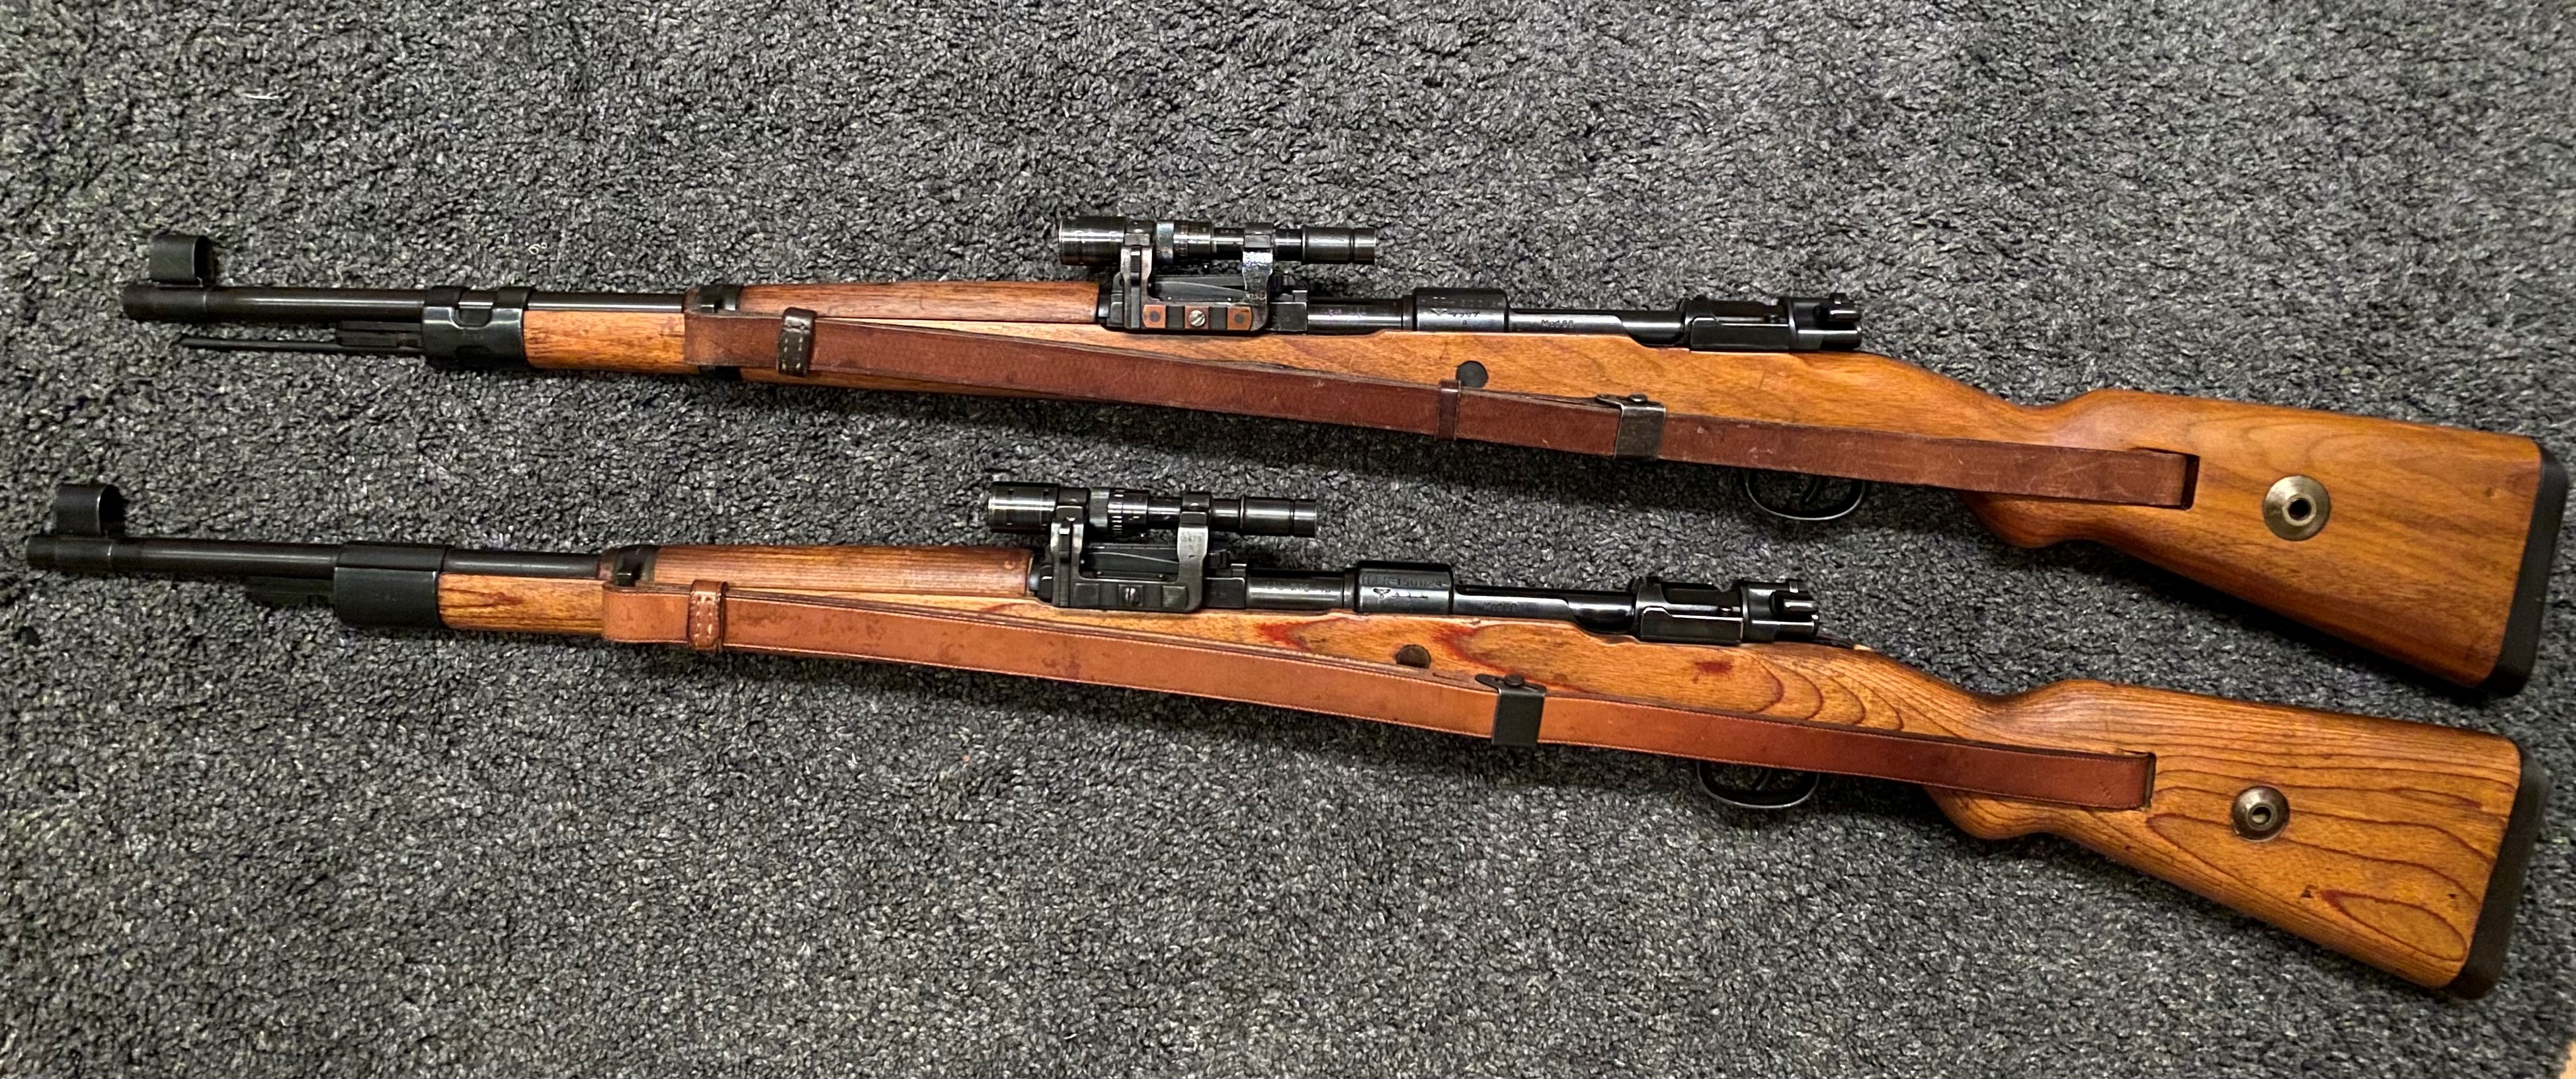 ./guns/rifle/bilder/Rifle-Kongsberg-Mauser-M98F1-ZF41-HAER150018-150024-1.jpg